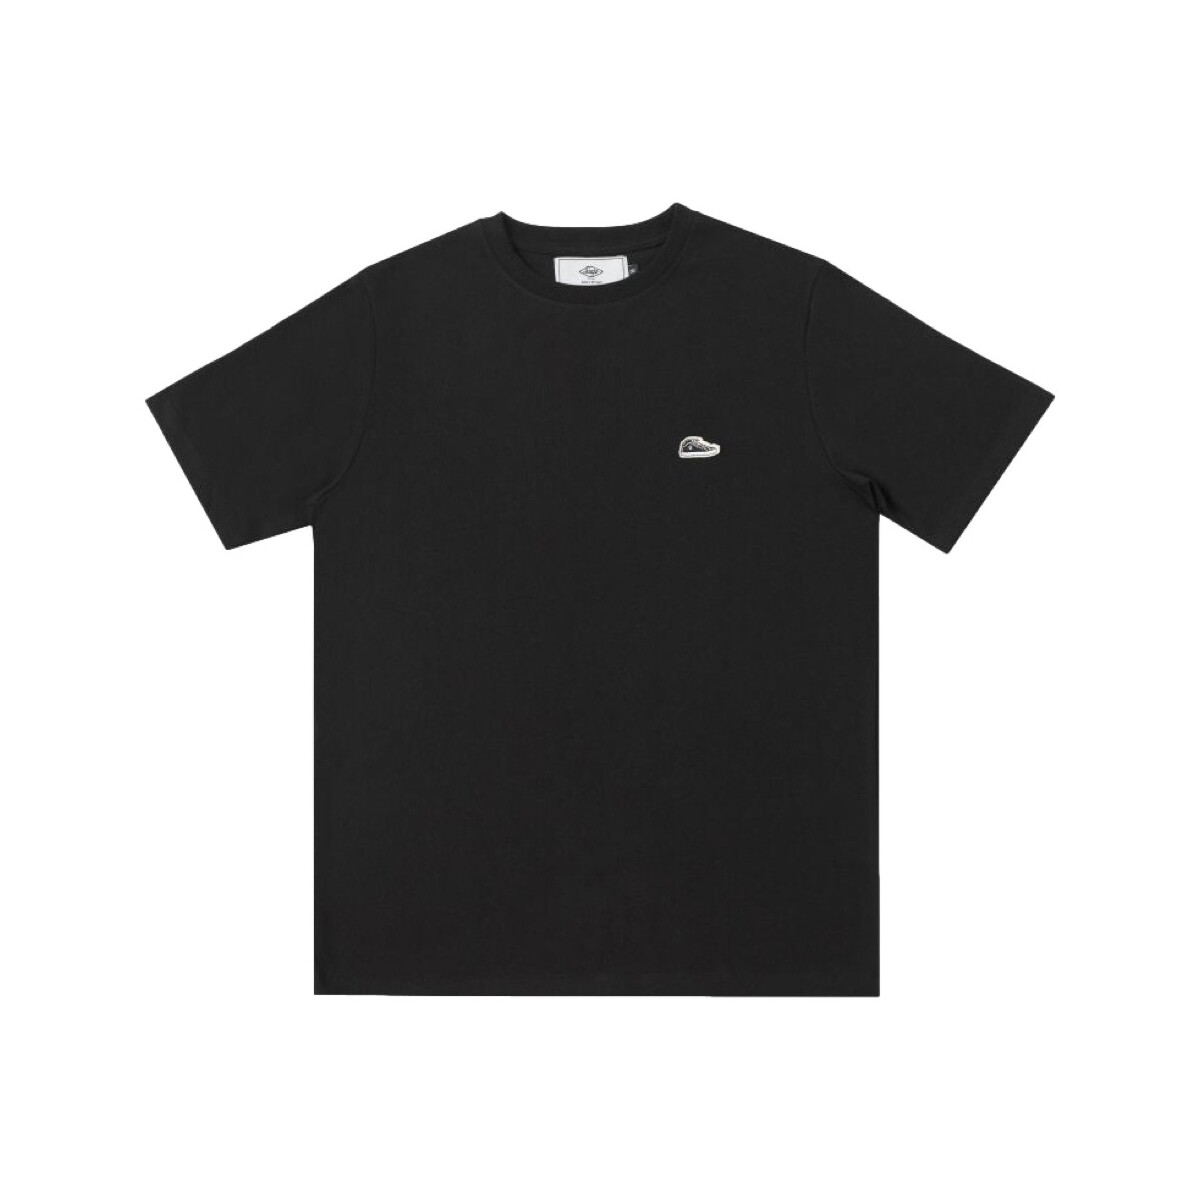 Vêtements Homme Women's Zimmermann Clothing T-Shirt intarsia-knit Patch Classic - Black Noir